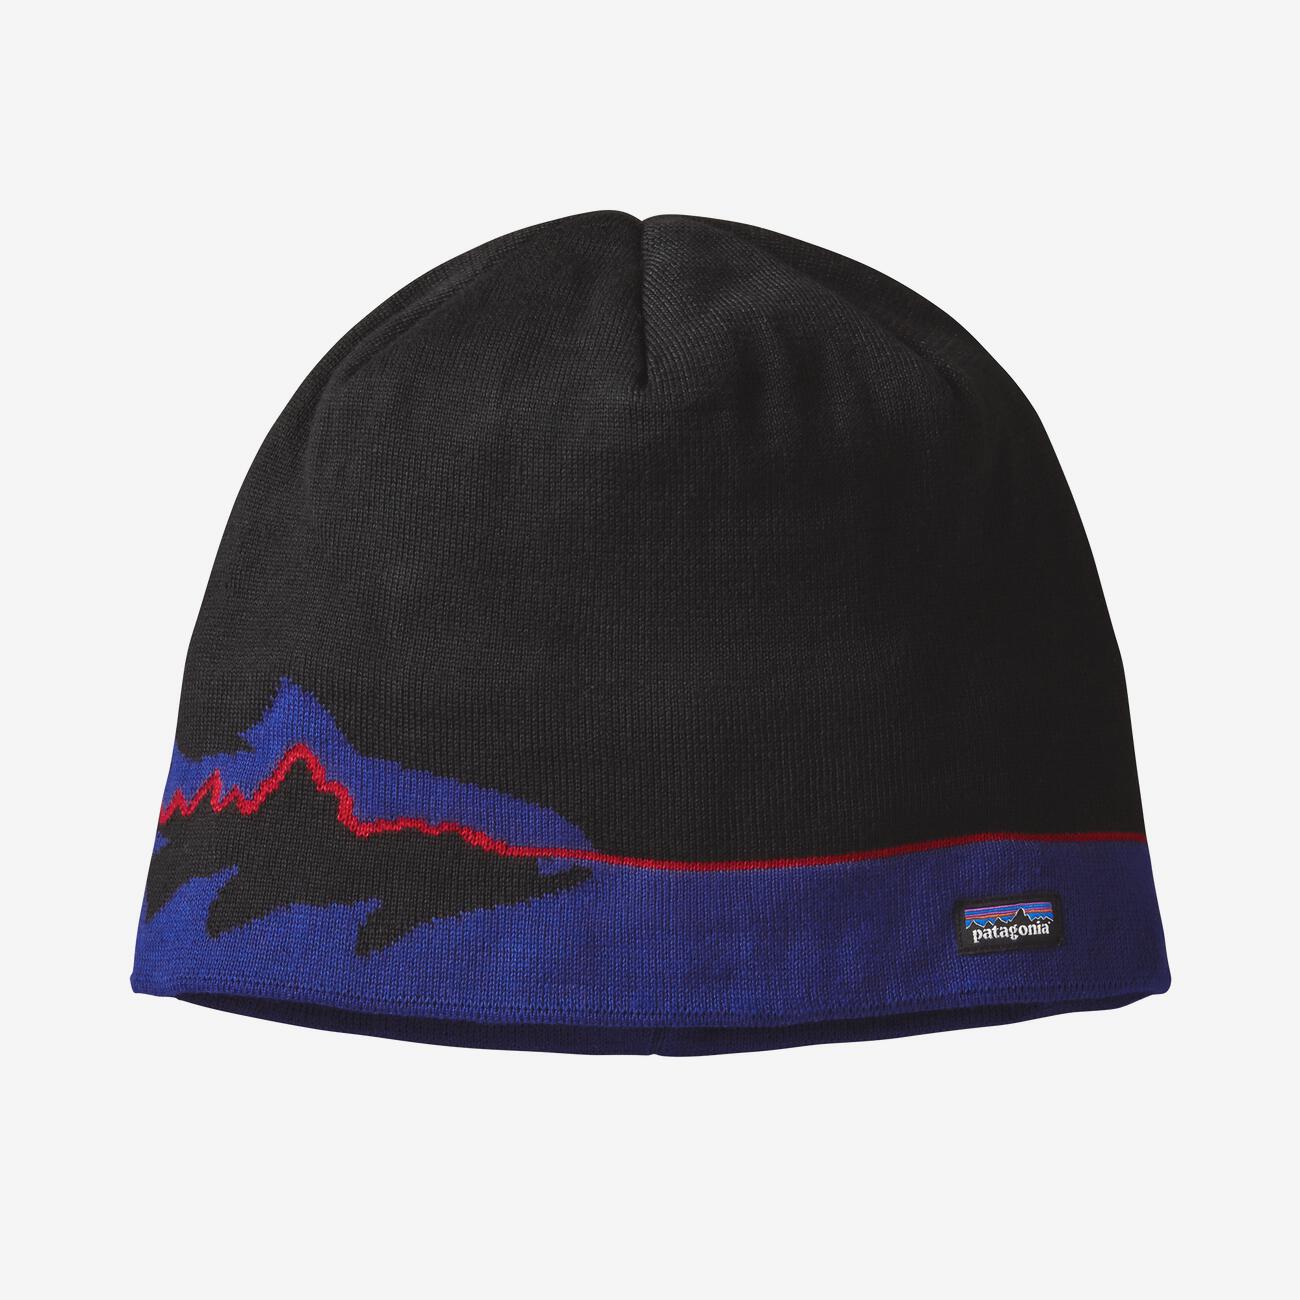 Patagonia Beanie Hat (Fitz Trout/Black)